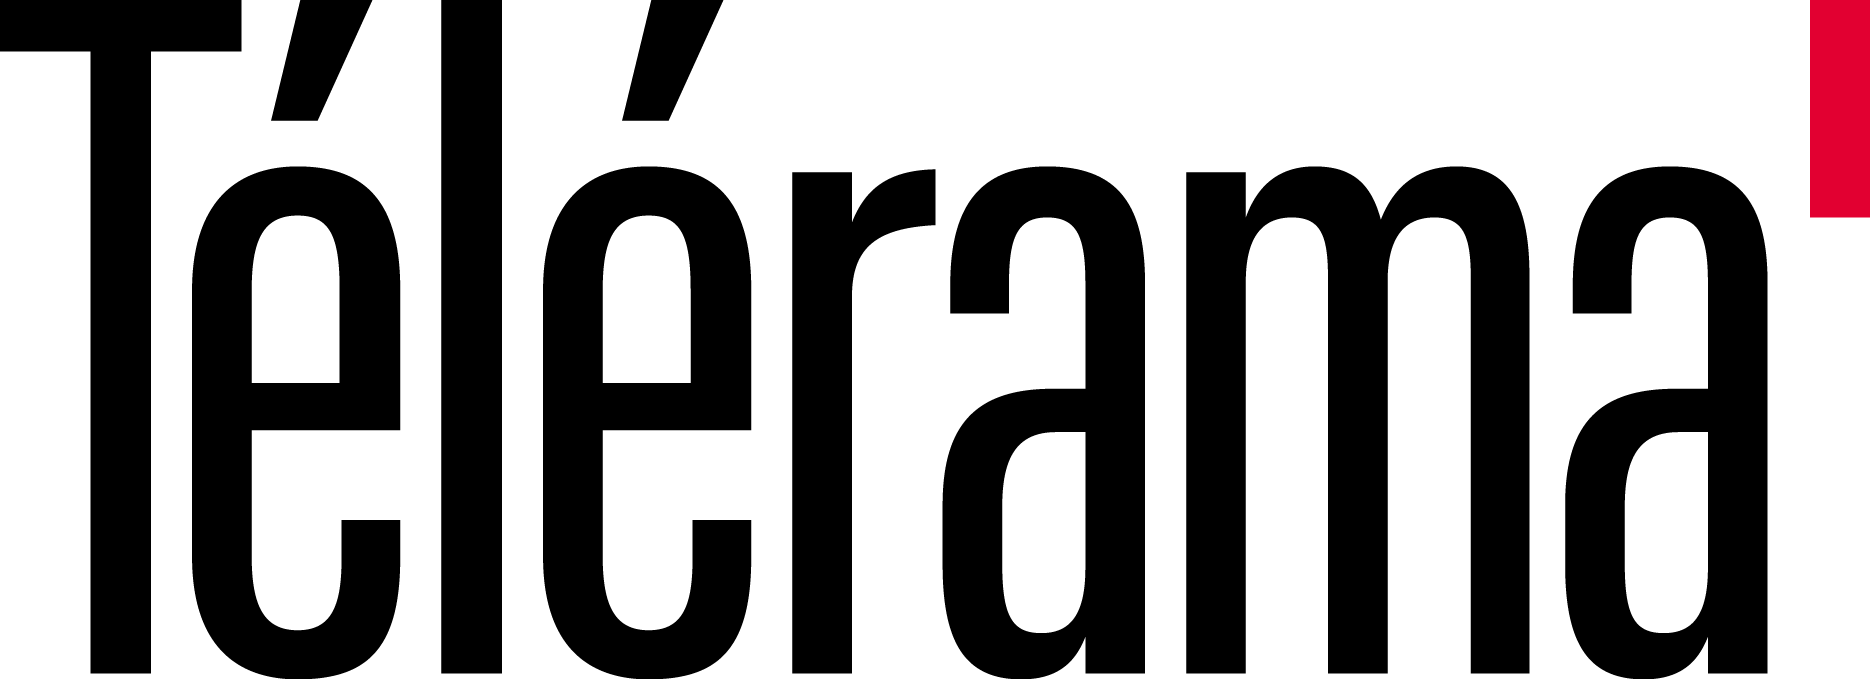 Fichier:Télérama logo.png — Wikipédia